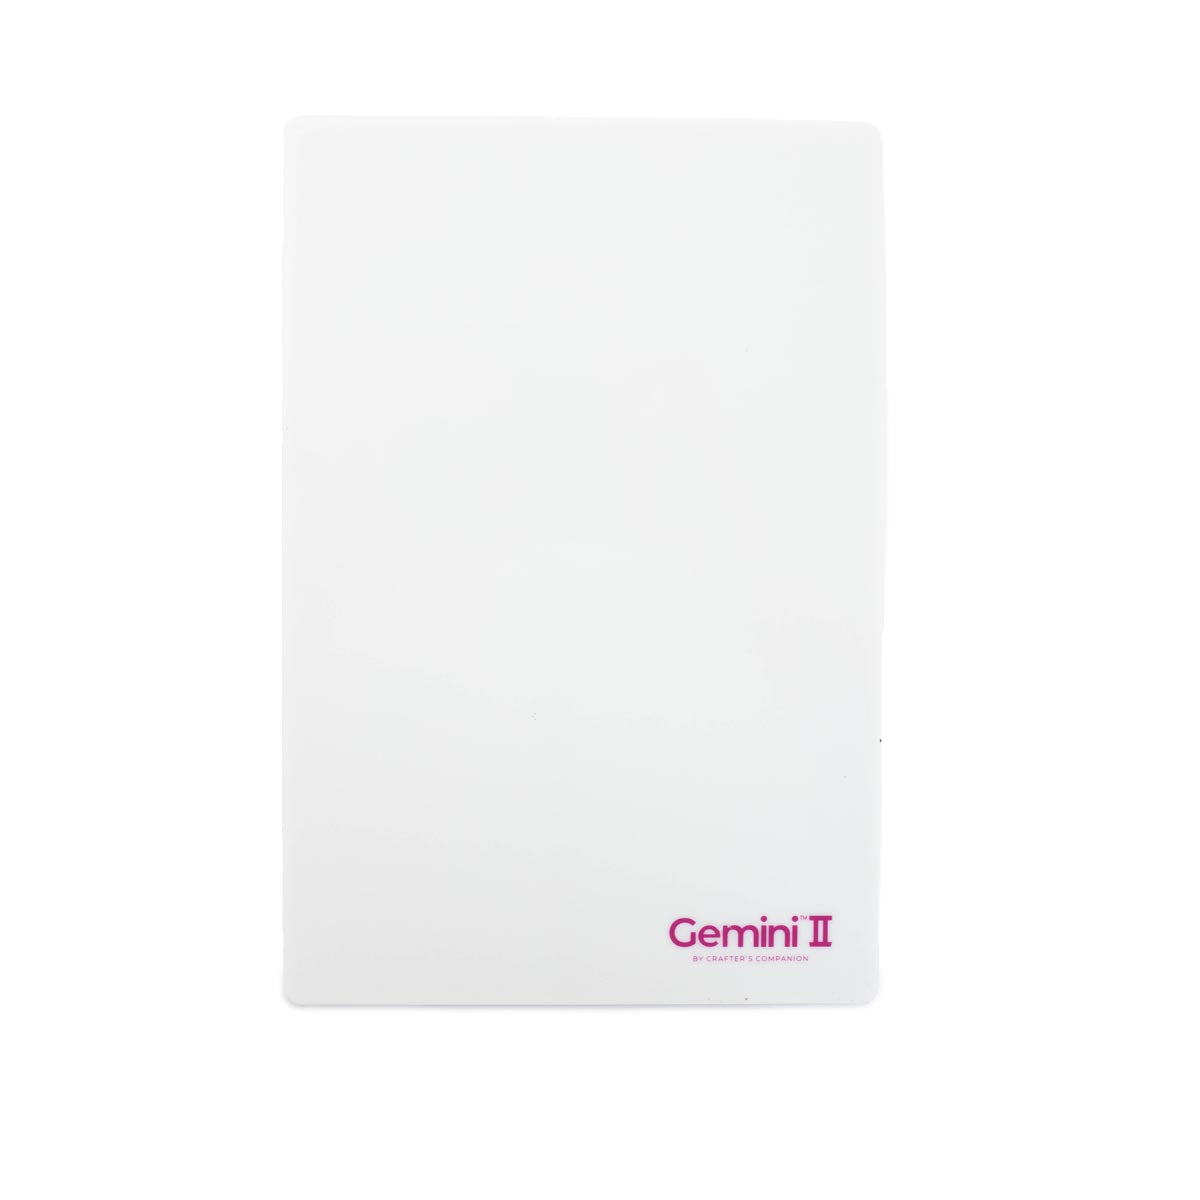 Crafter's Companion - Gemini II Accessories - White Cutting Plate 9"x6"